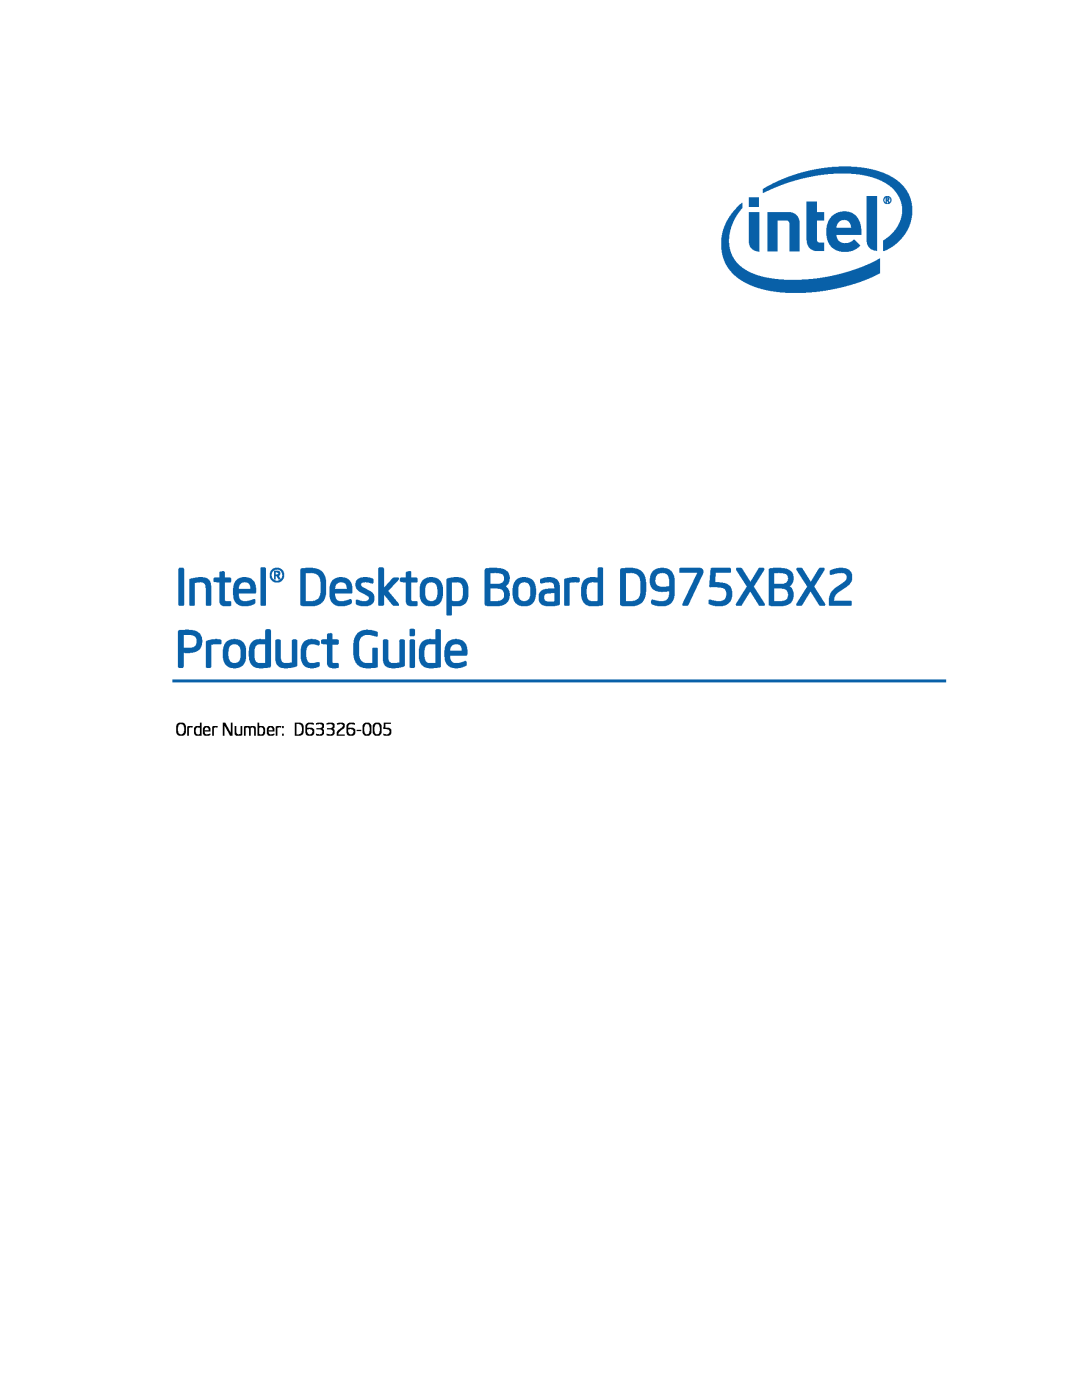 Intel manual Order Number D63326-005, Intel Desktop Board D975XBX2 Product Guide 